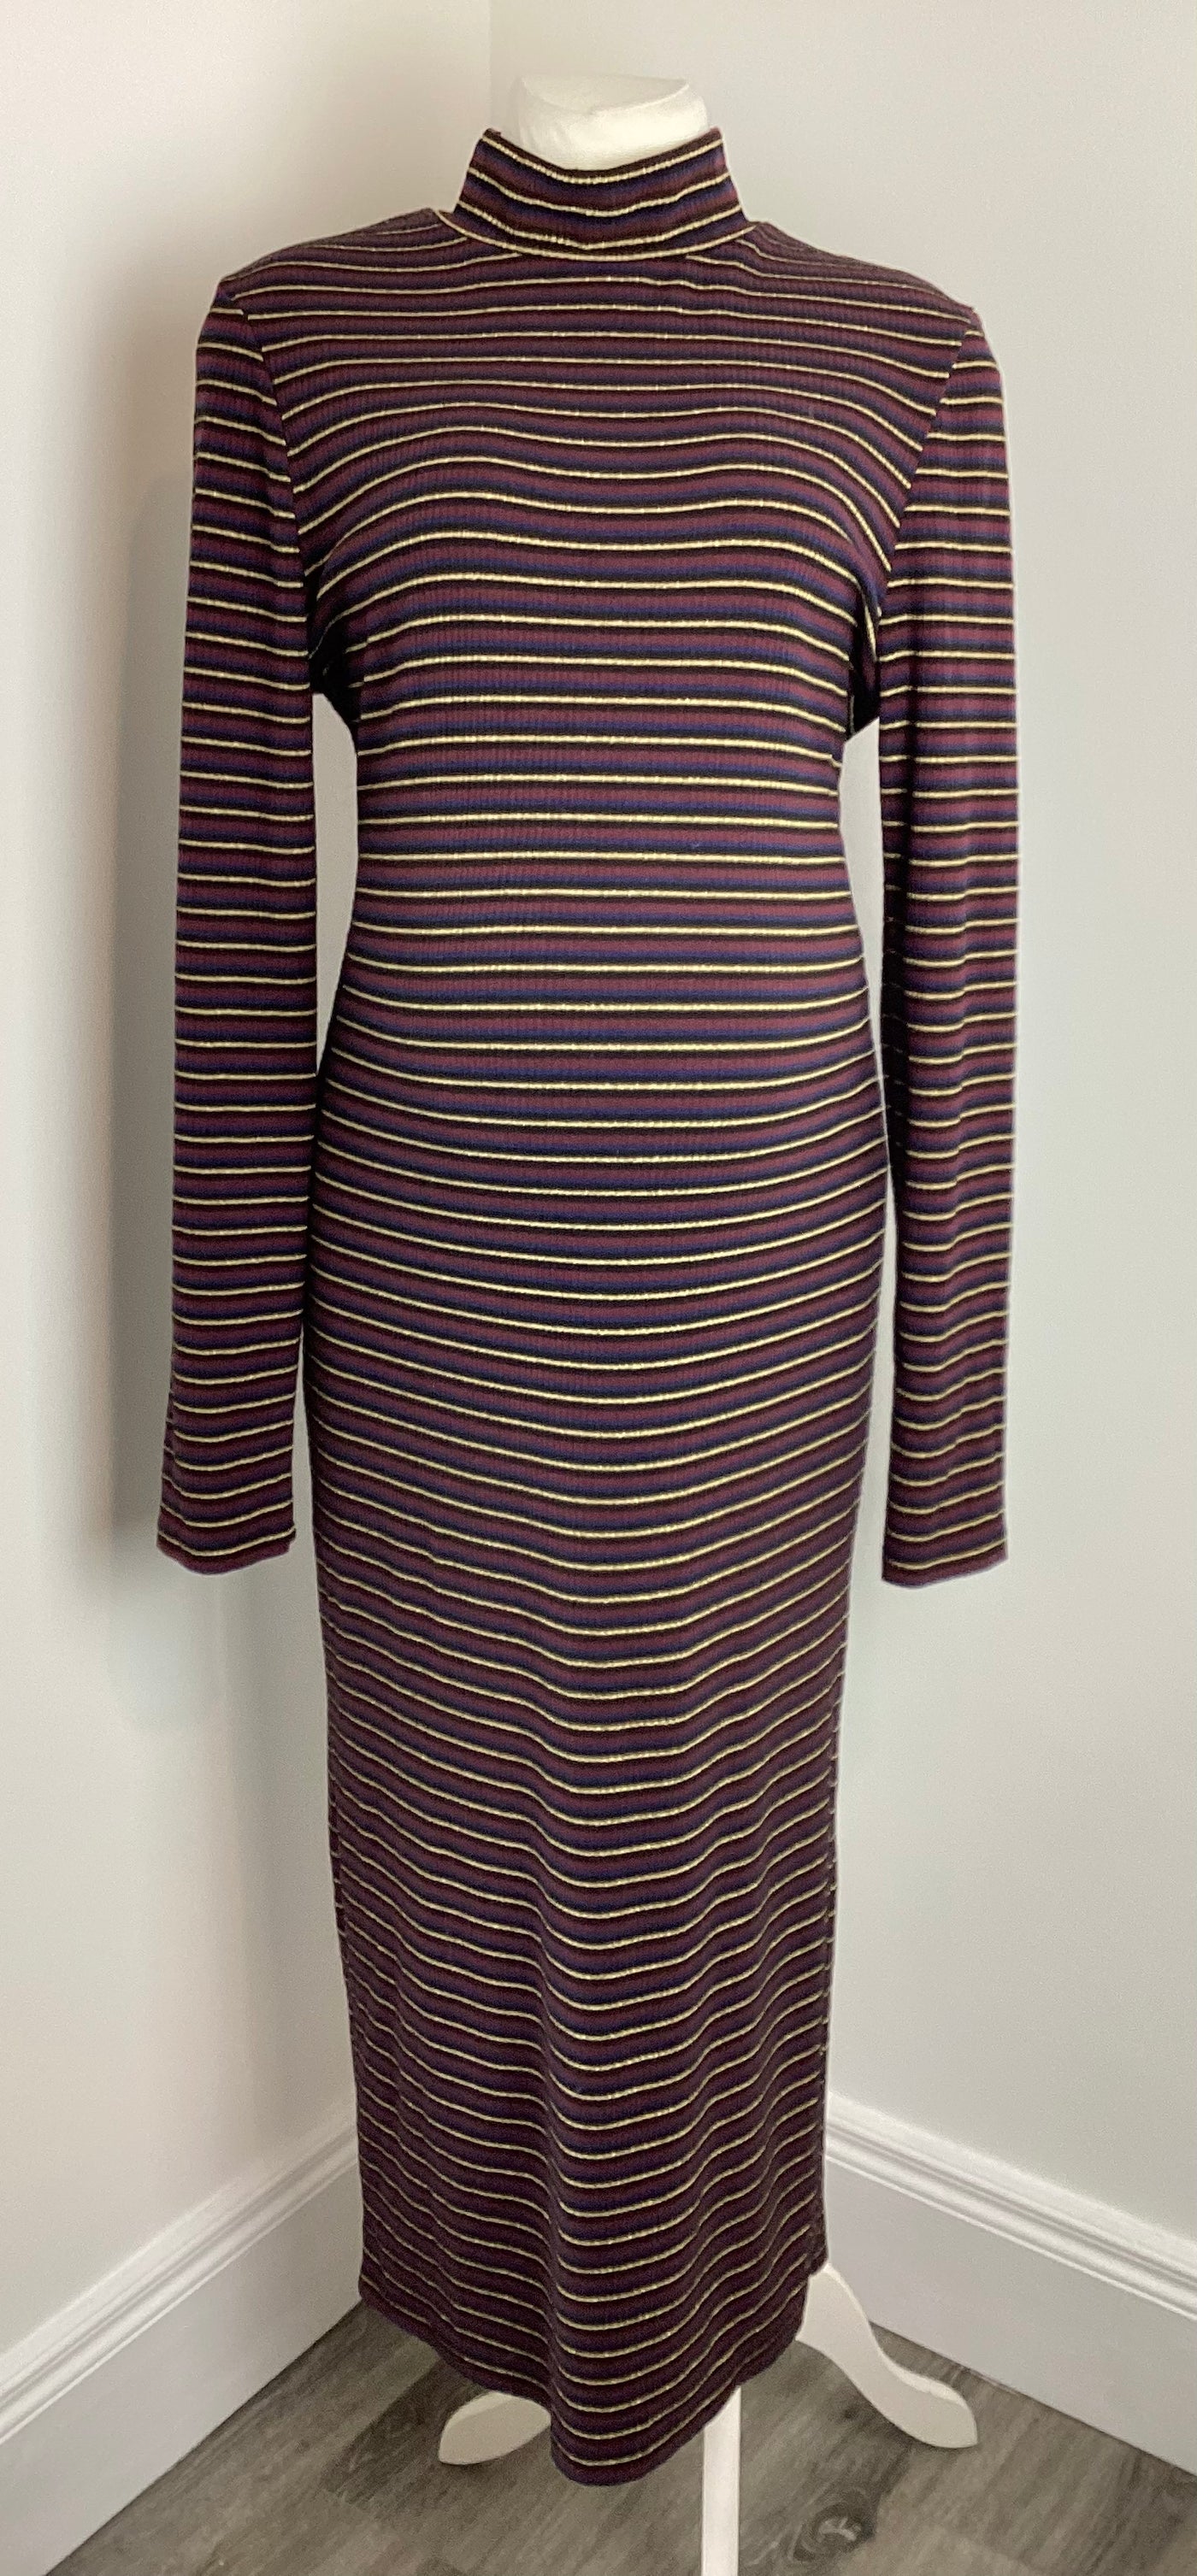 Topshop Maternity black/gold/navy/burgandy stripe polo neck long sleeved dress - Size 16